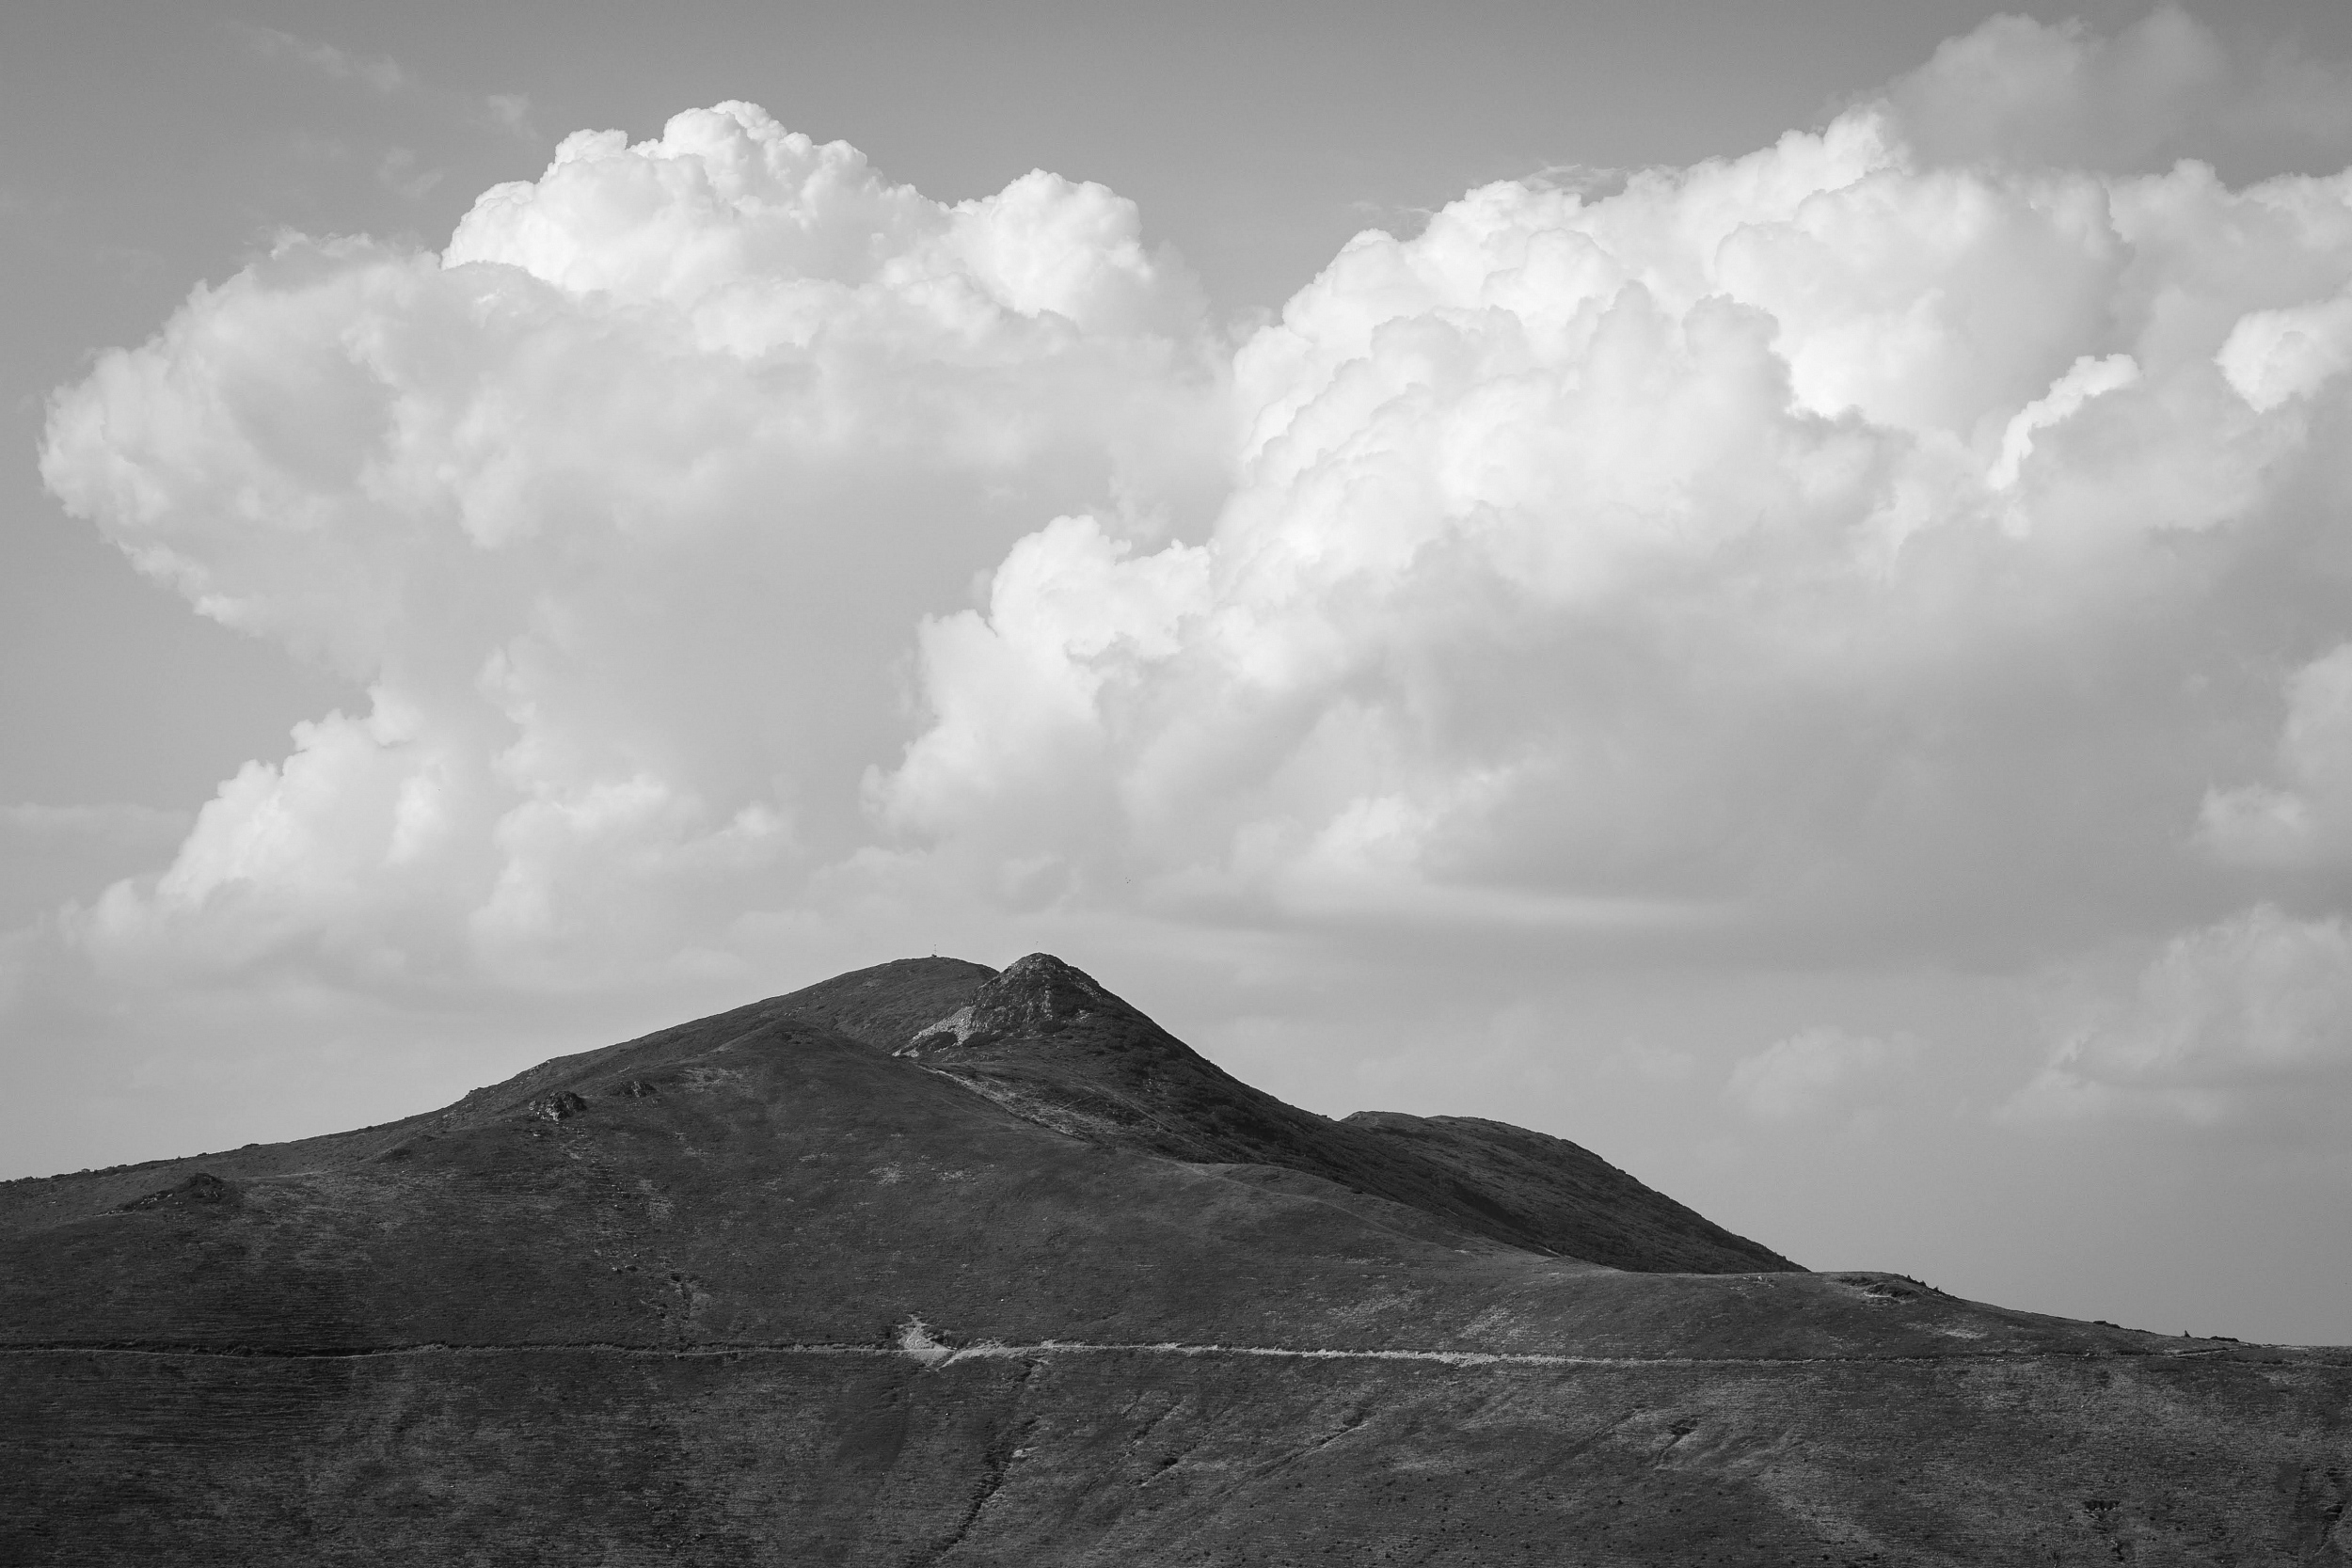 Munții Suhard / Vârful Omului (1932 m). Zdroj: http://jdem.cz/ffvqk4